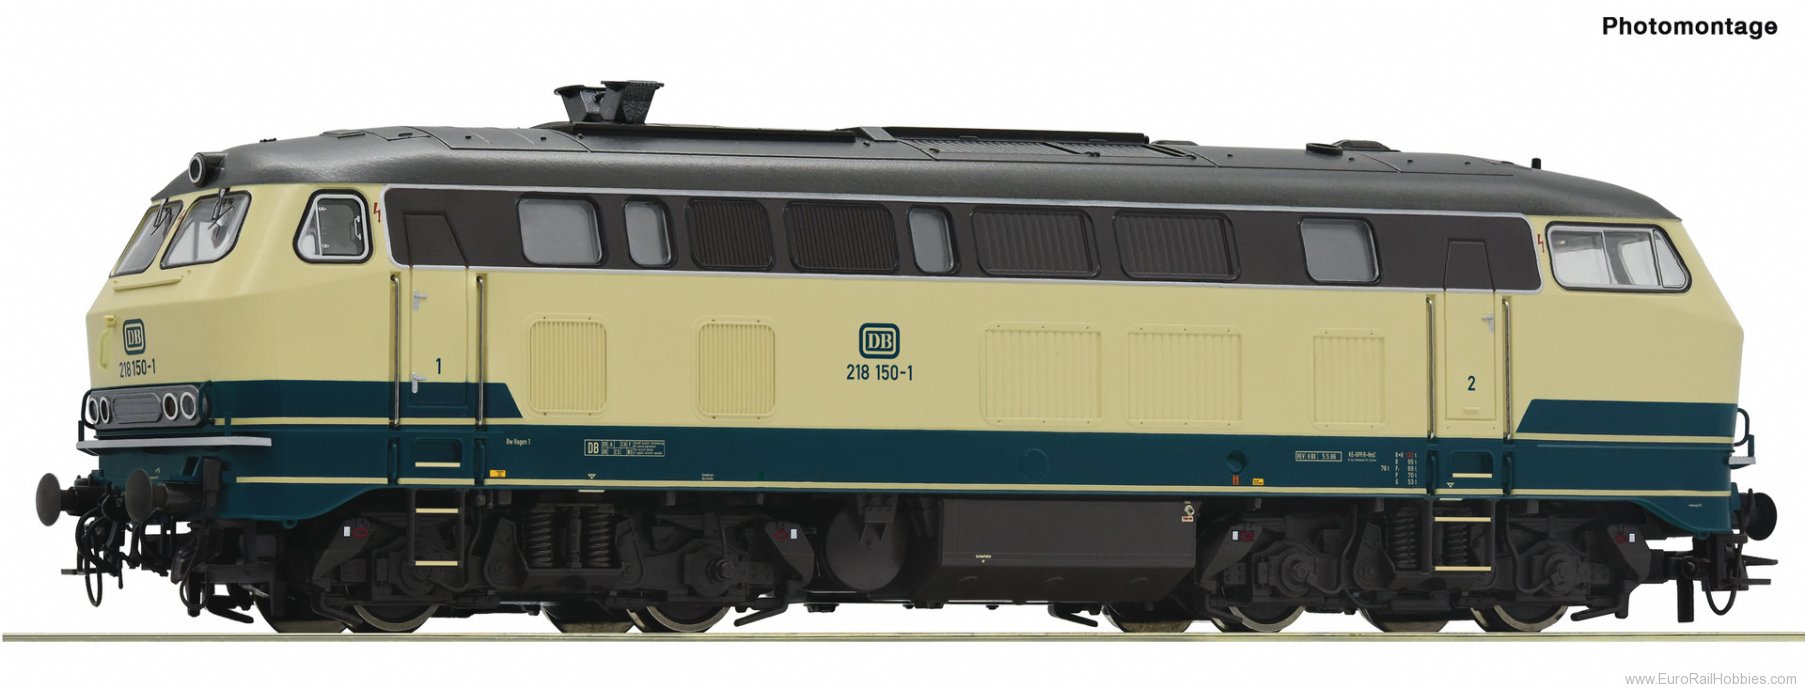 Roco 7320010 Diesel locomotive 218 150-1, DB (AC Digital S